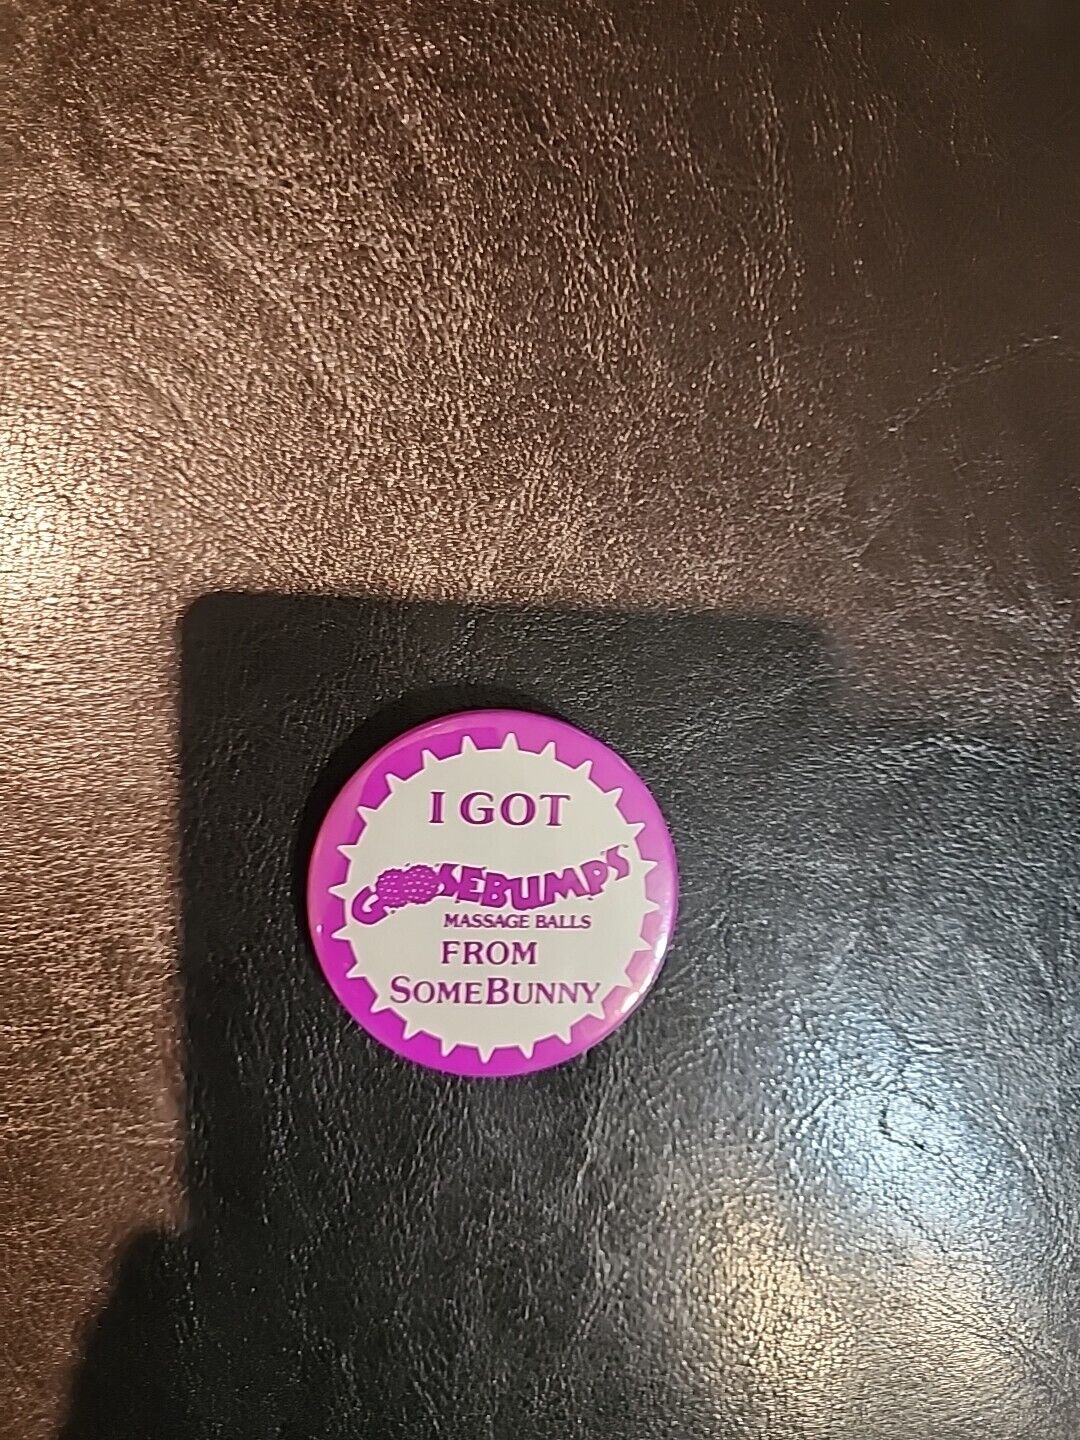 I Got Goosebumps From Some Bunny Massage Balls Vintage Pin Pinback Purple